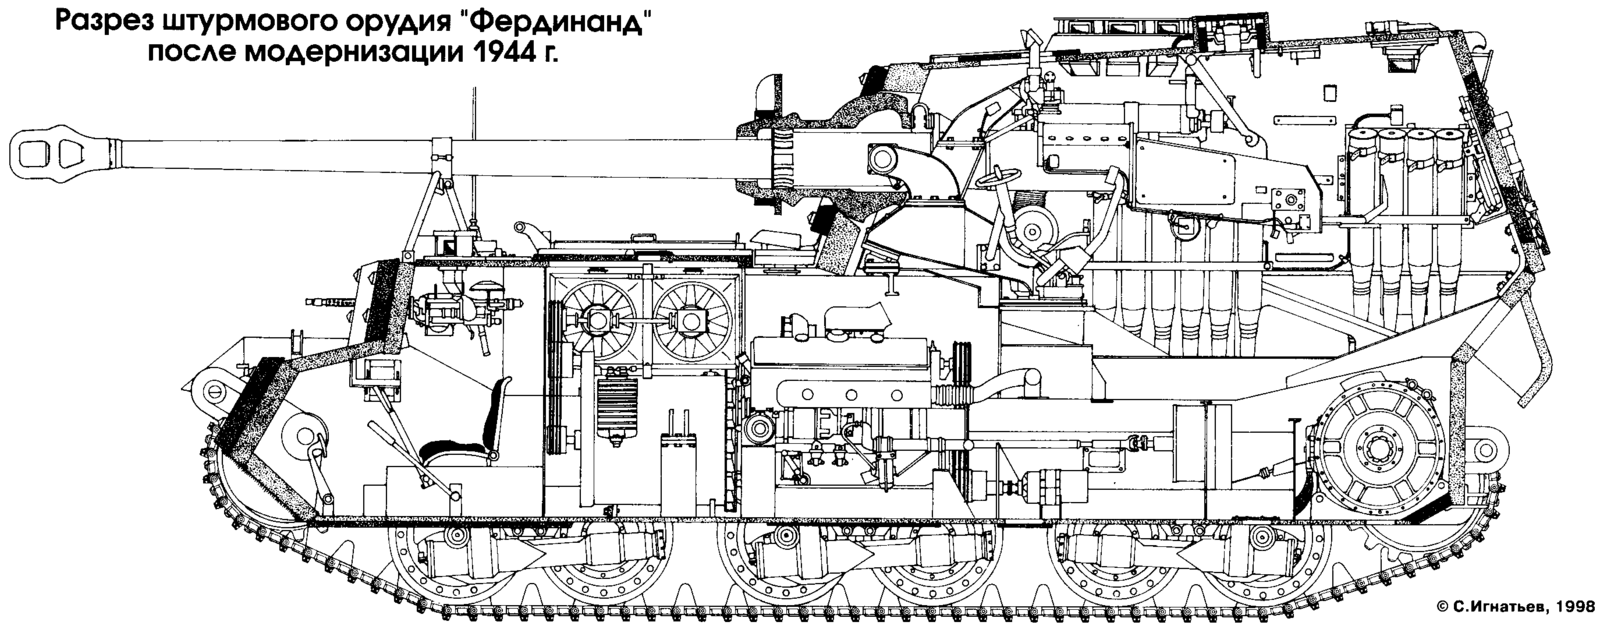 http://armor.kiev.ua/wiki/images/thumb/7/7f/Ferd_3.png/1600px-Ferd_3.png